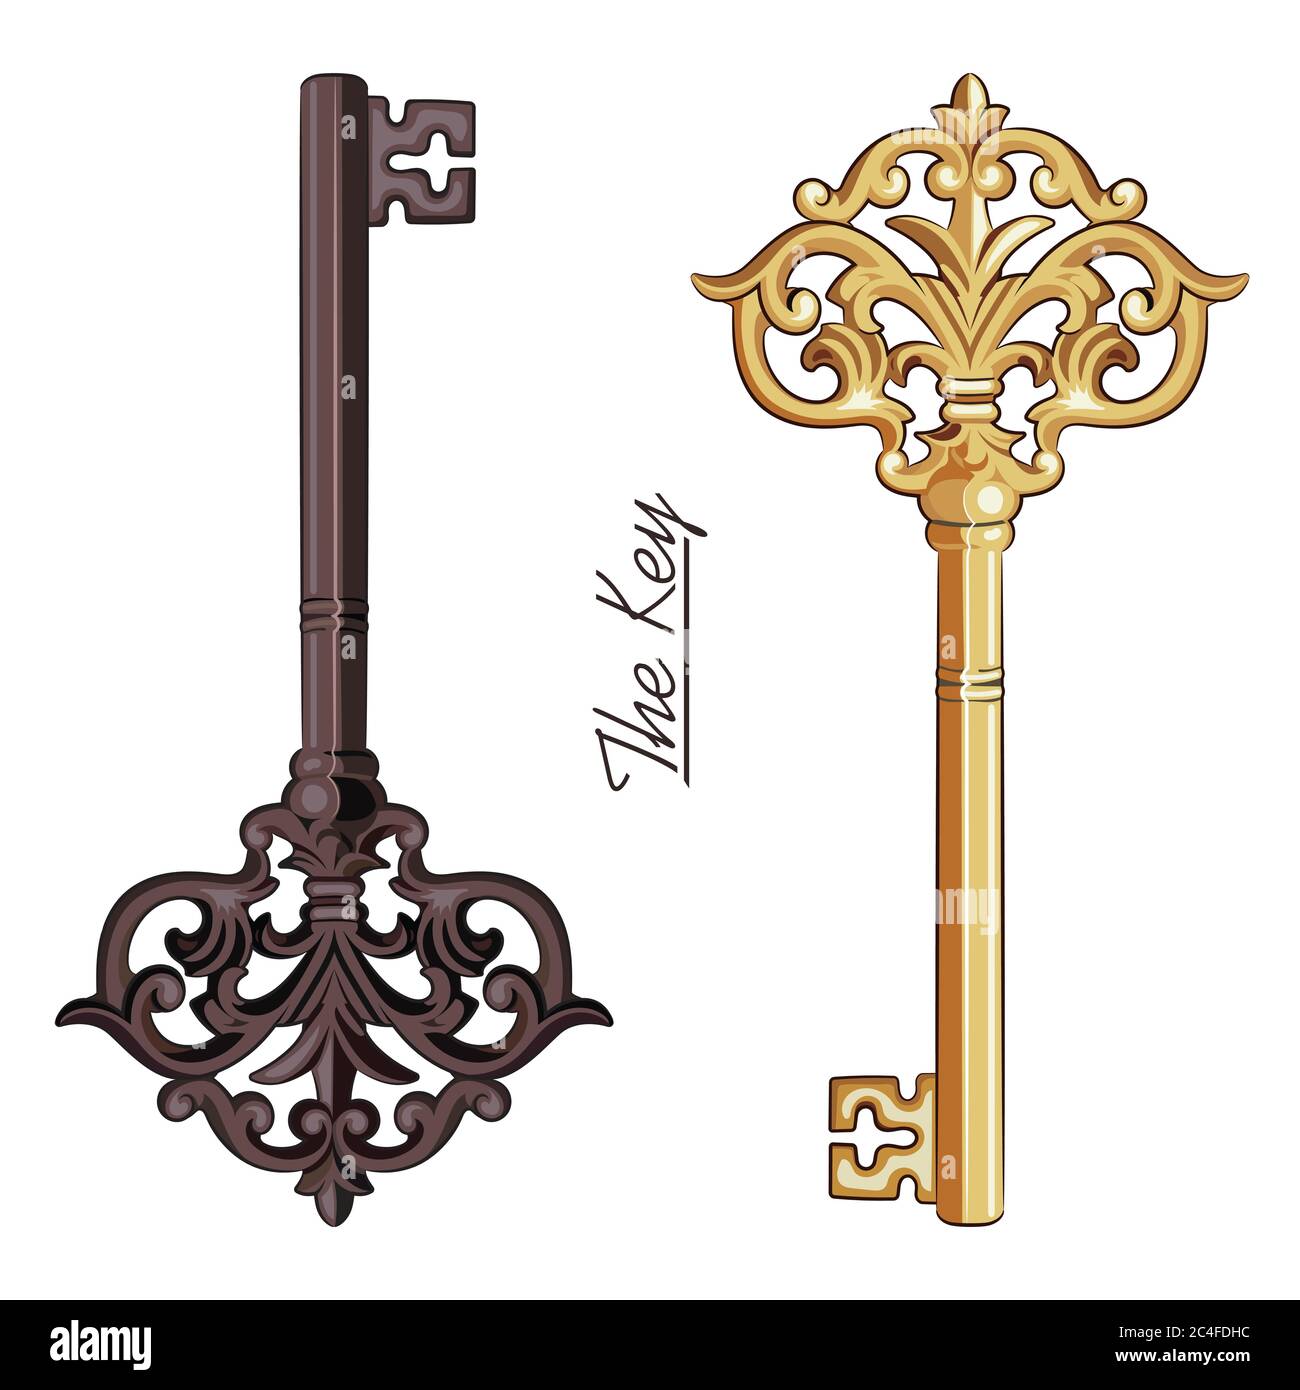 Ornamental medieval vintage keys with victorian leaf scrolls, hand-drawn antique keys Stock Vector